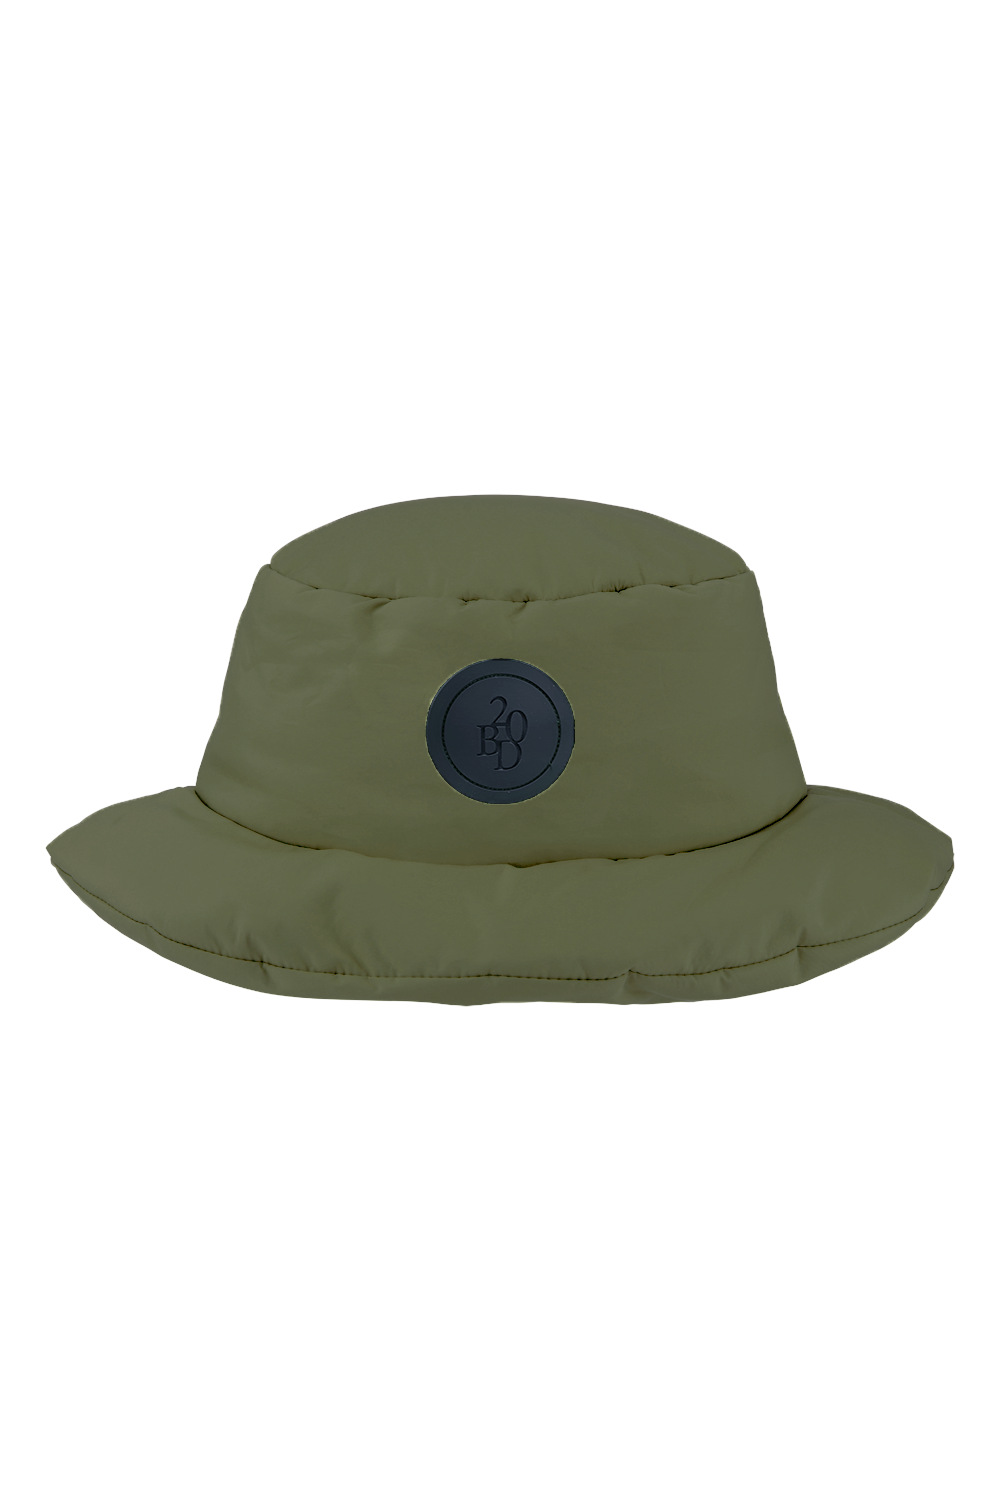 Tanya Down Bucket Hat Classic Army Green - Sample